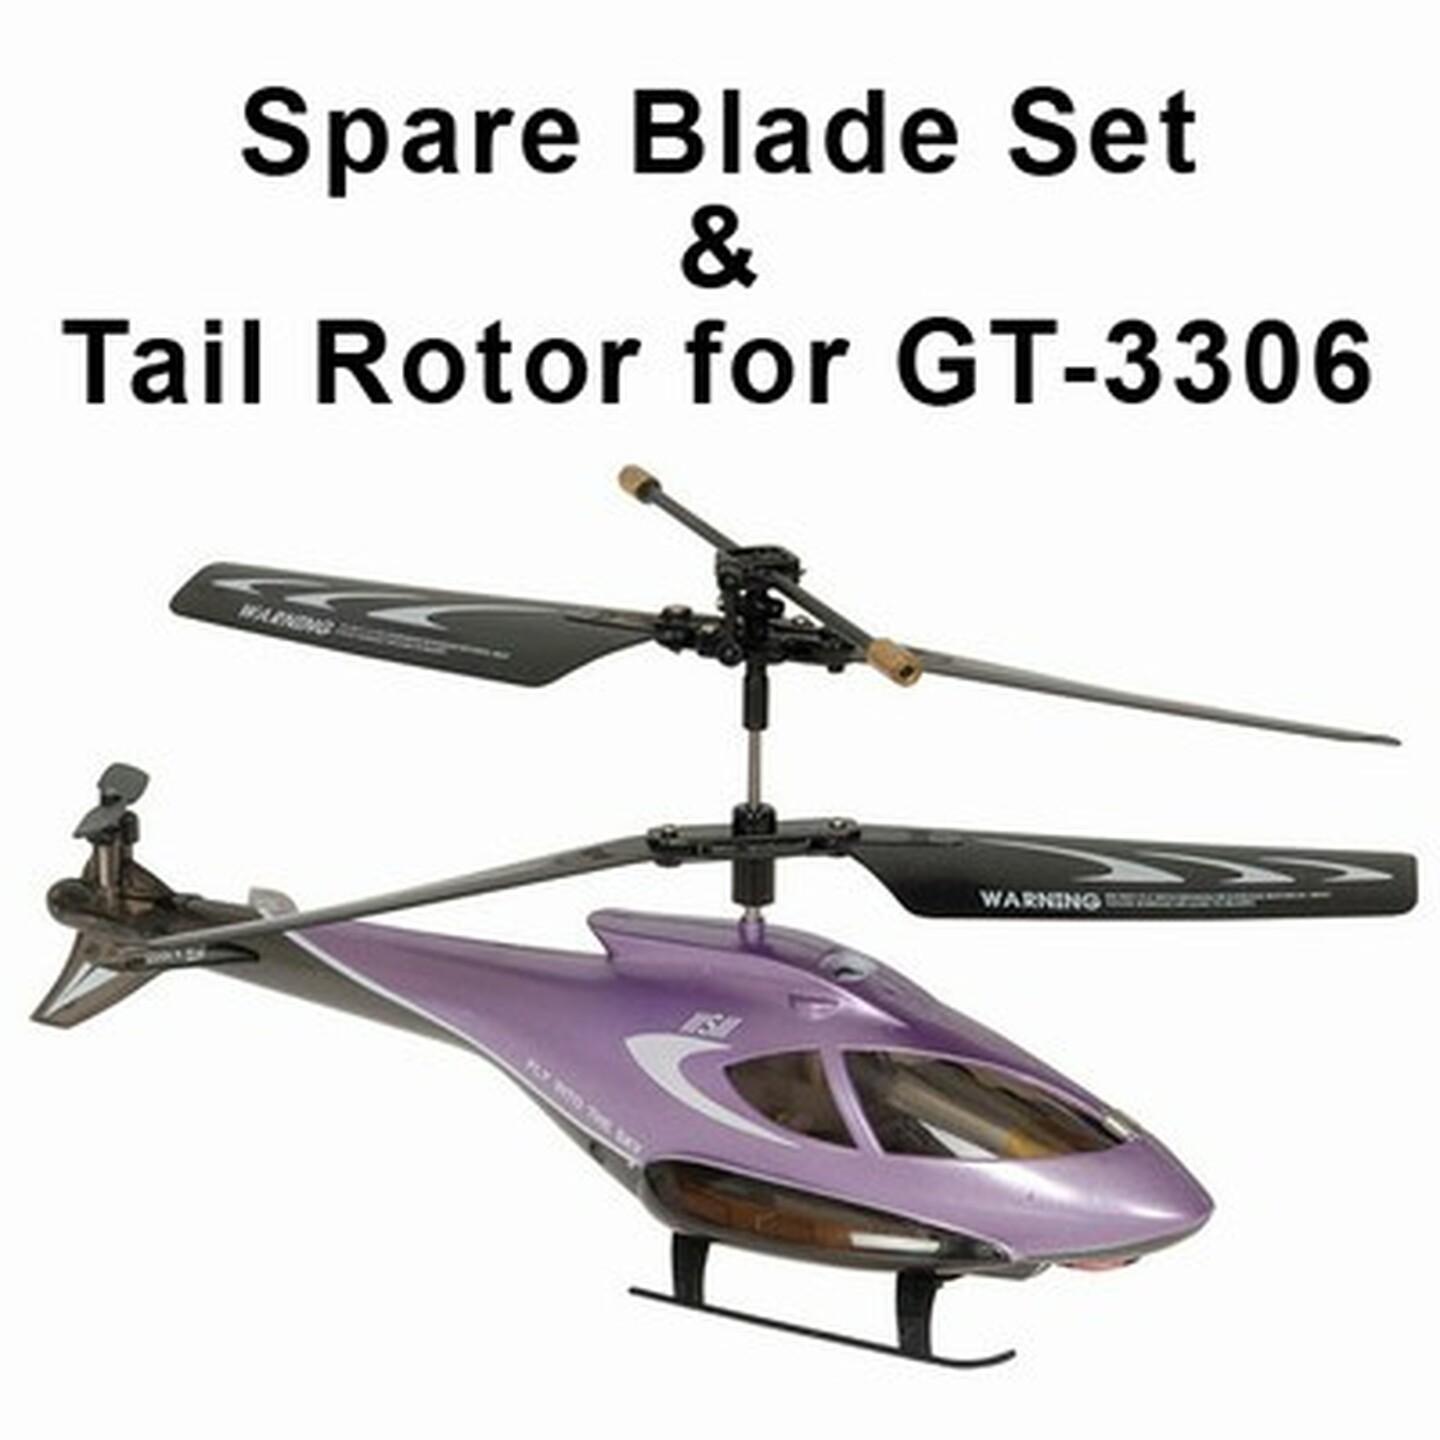 Spare Blade Set for GT-3306